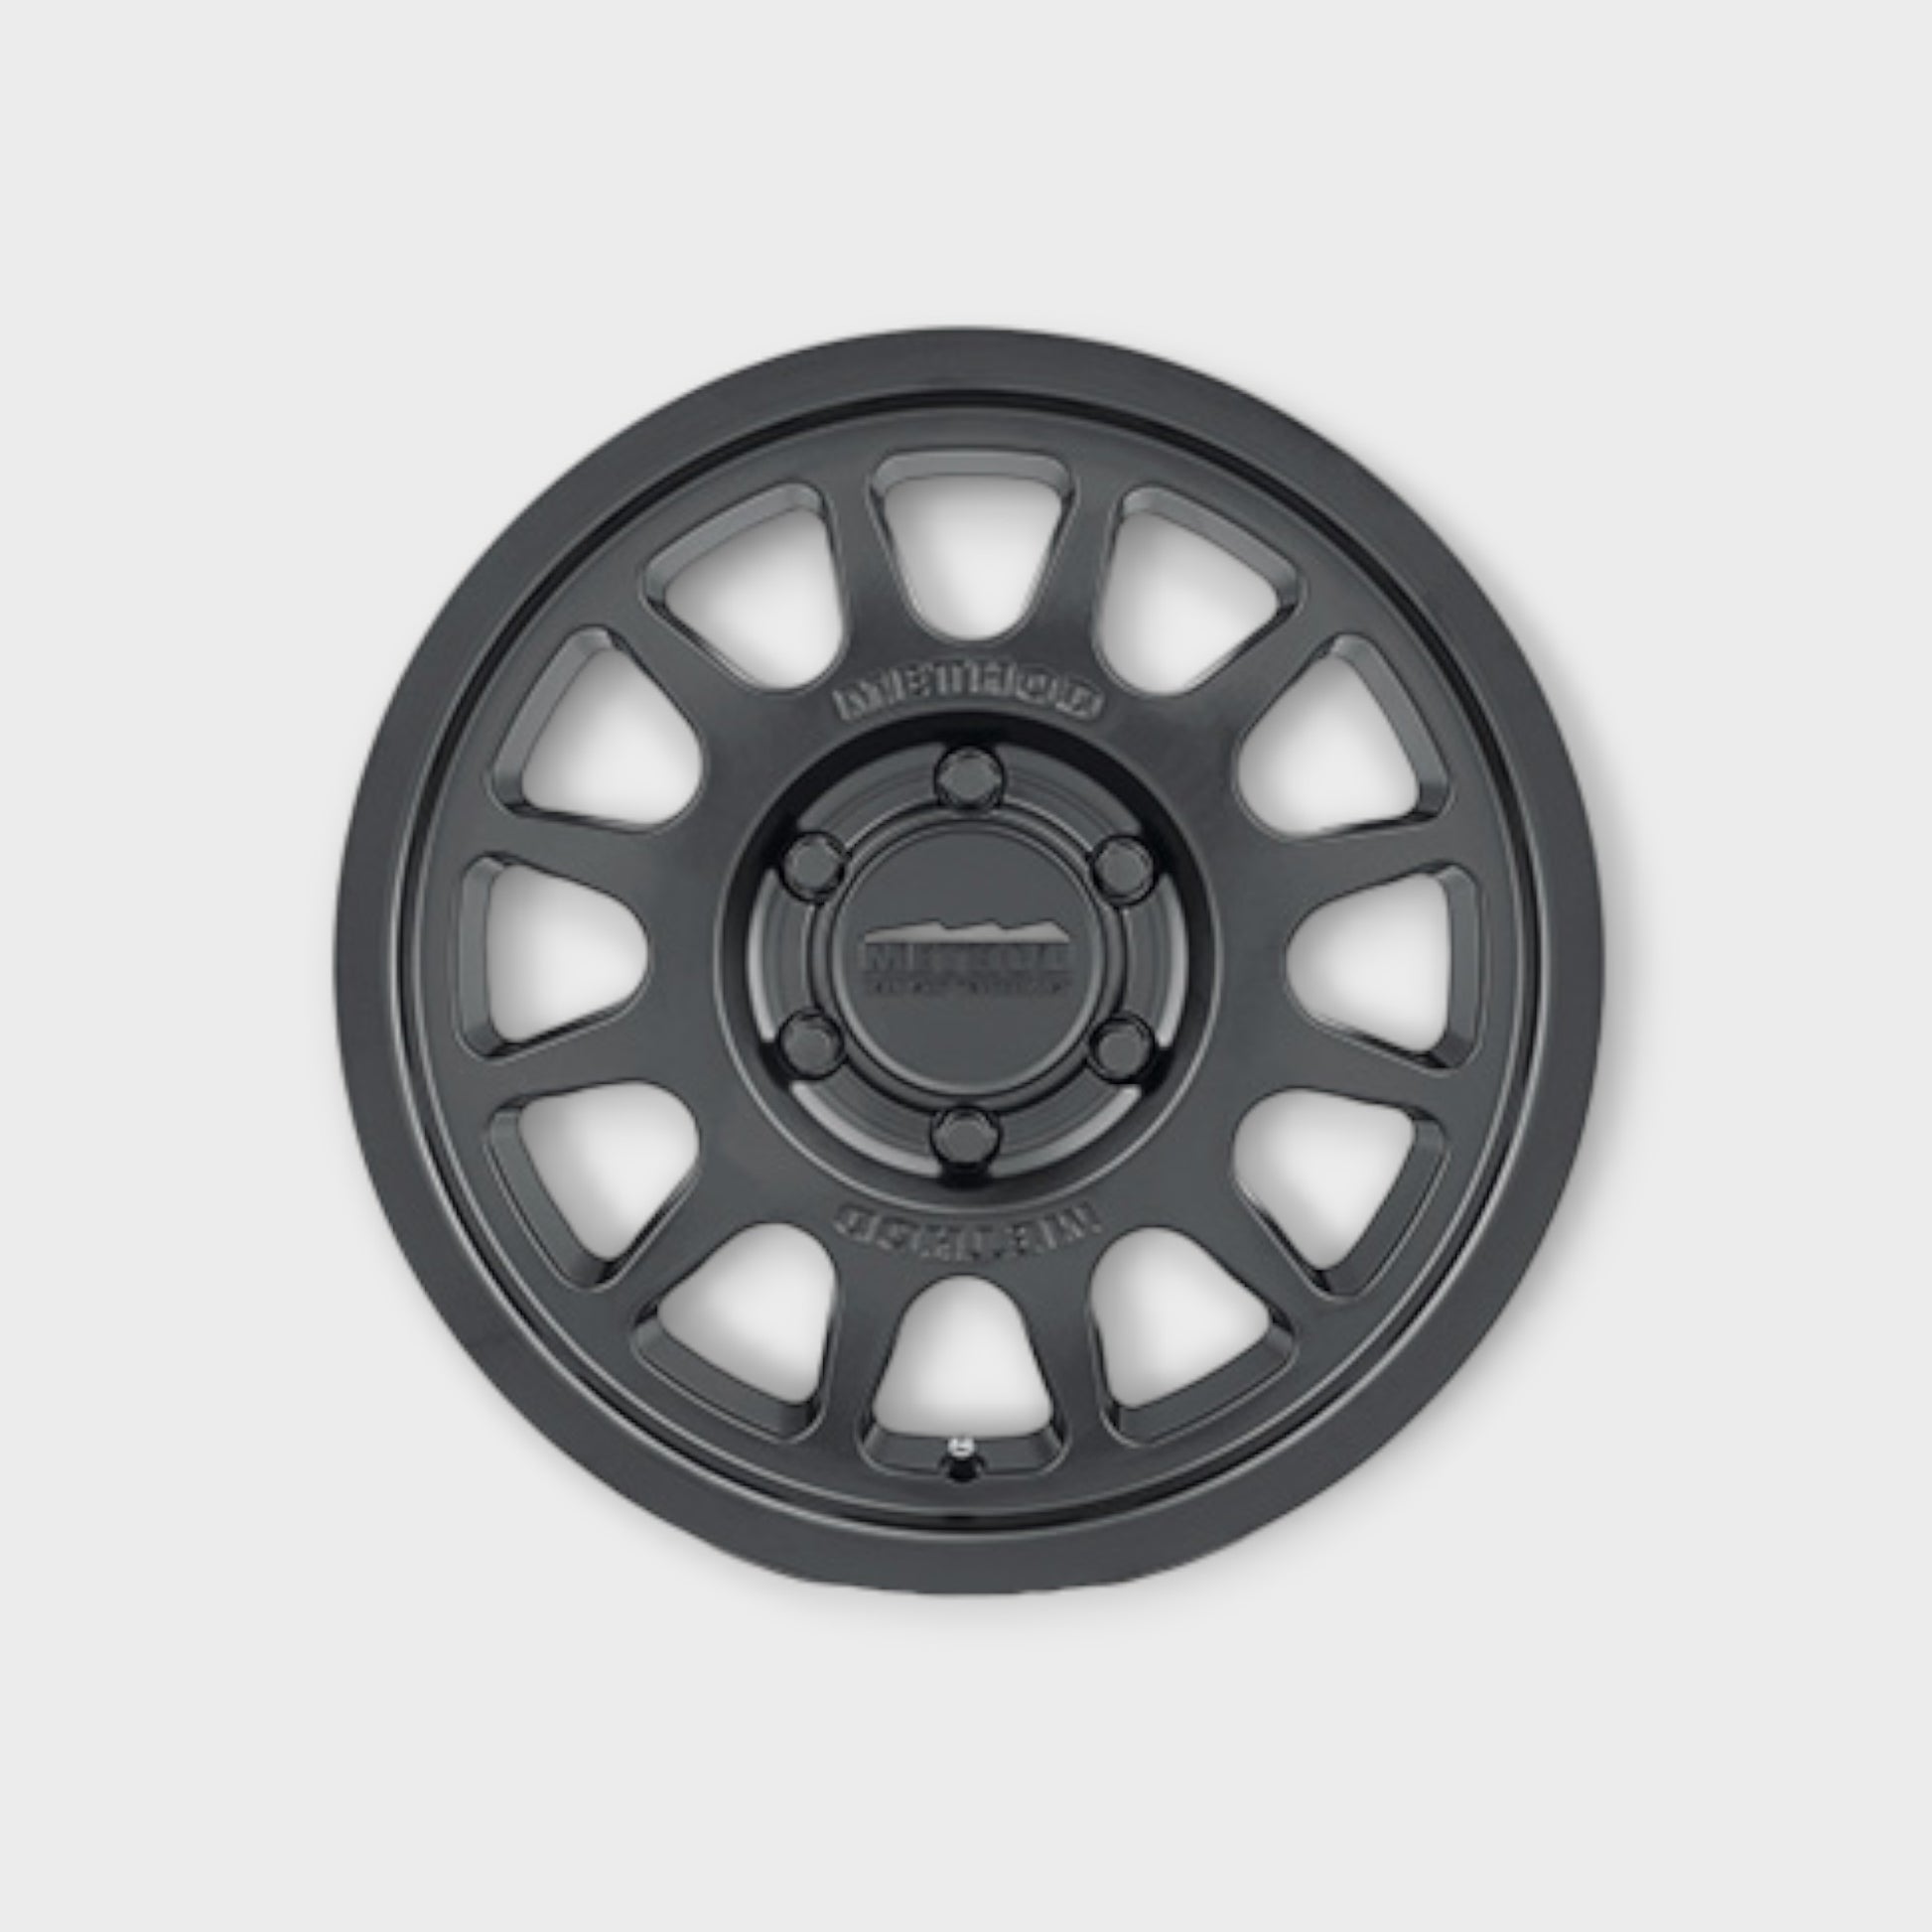 Bronco 703 Wheel Kit - Matte 2